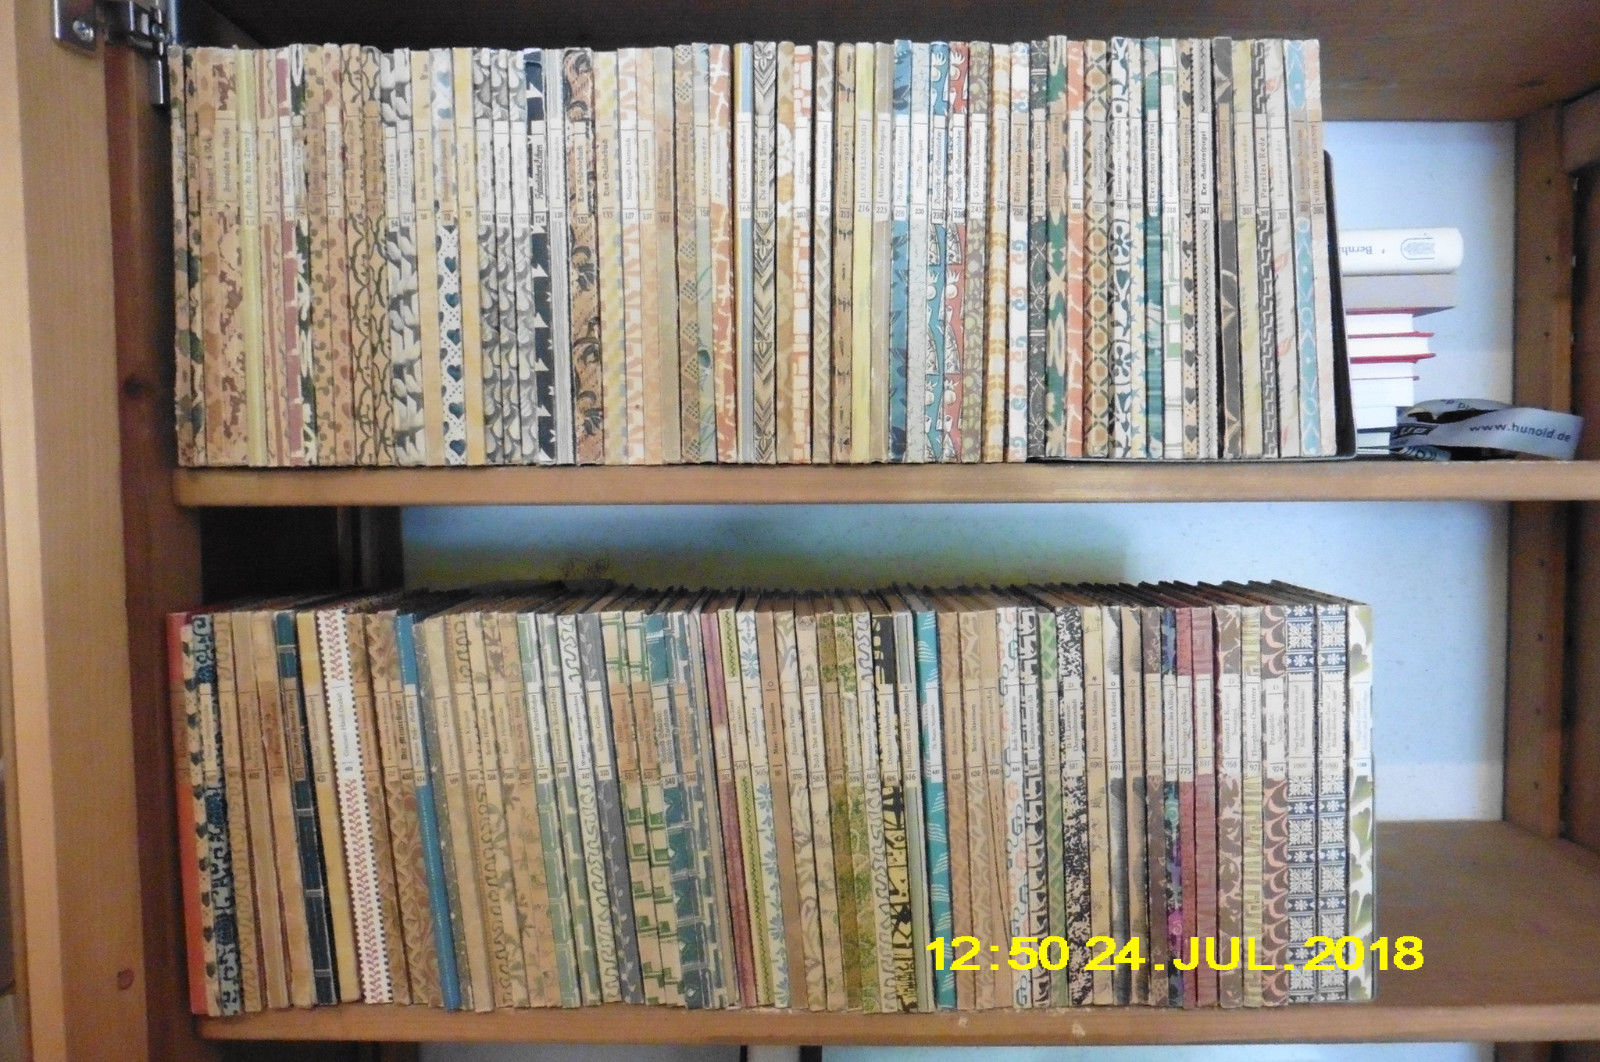 ca. 120 Bde Insel Bücherei ca. 1912 - 1999